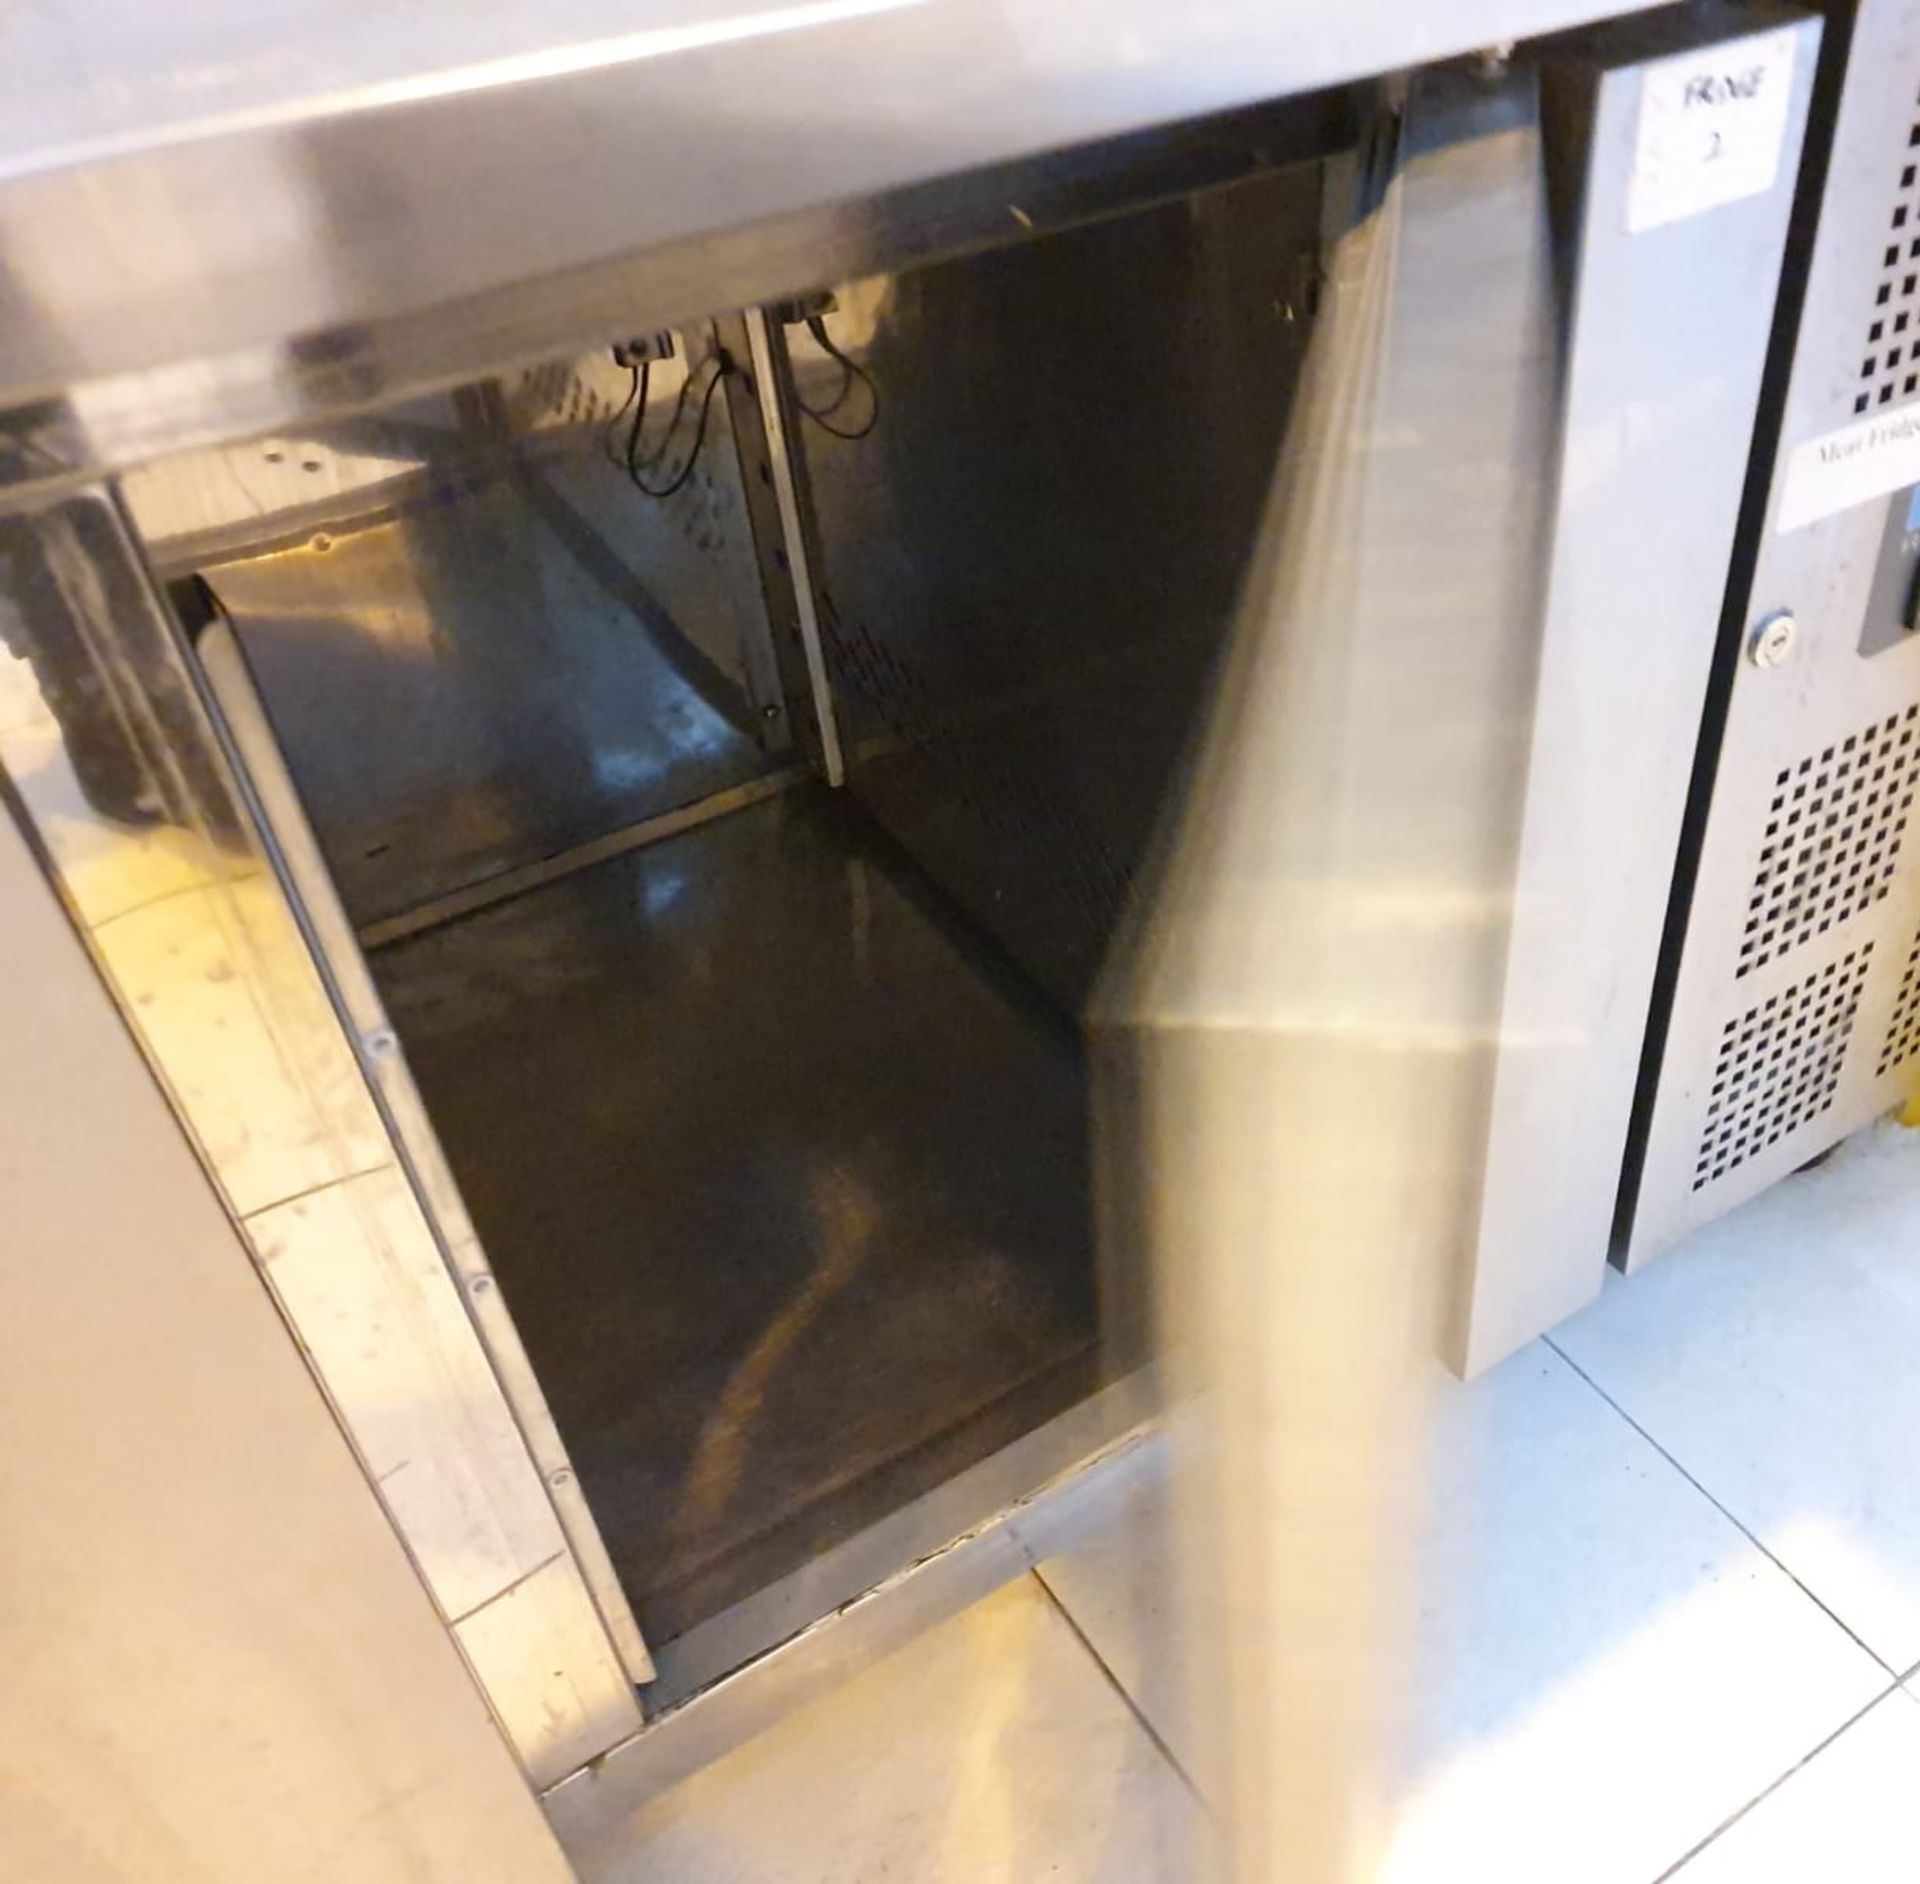 1 x Polar Stainless Steel 4-Door Counter Freezer 553 Ltr. Model: G601 **£5 Start - No Reserve** - Image 5 of 7